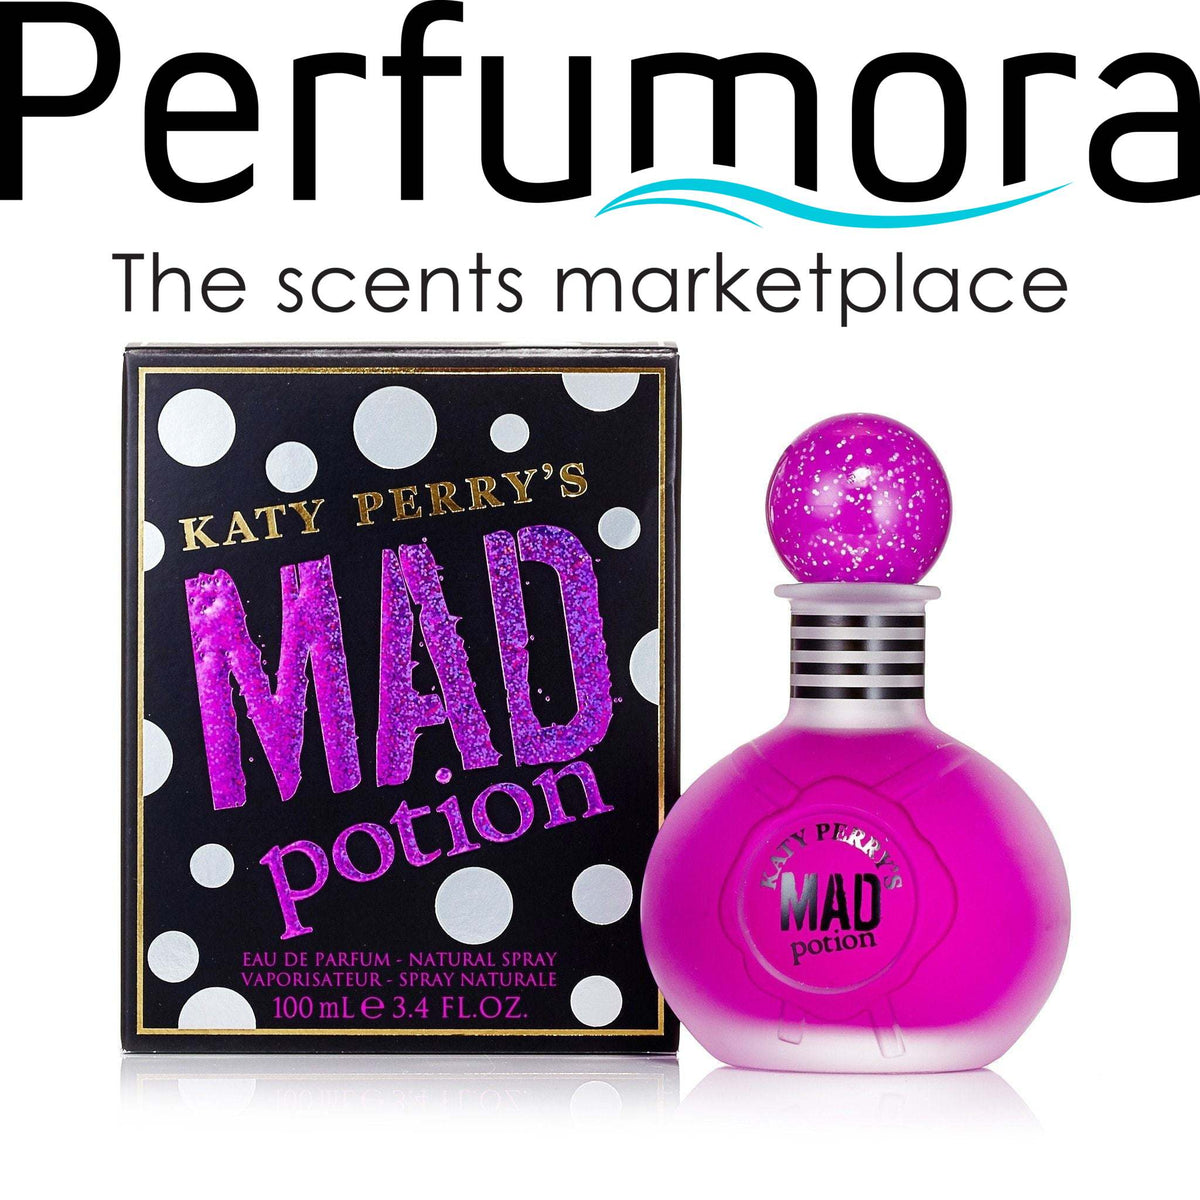 Mad Potion Eau de Parfum Spray for Women by Katy Perry 3.4 oz.